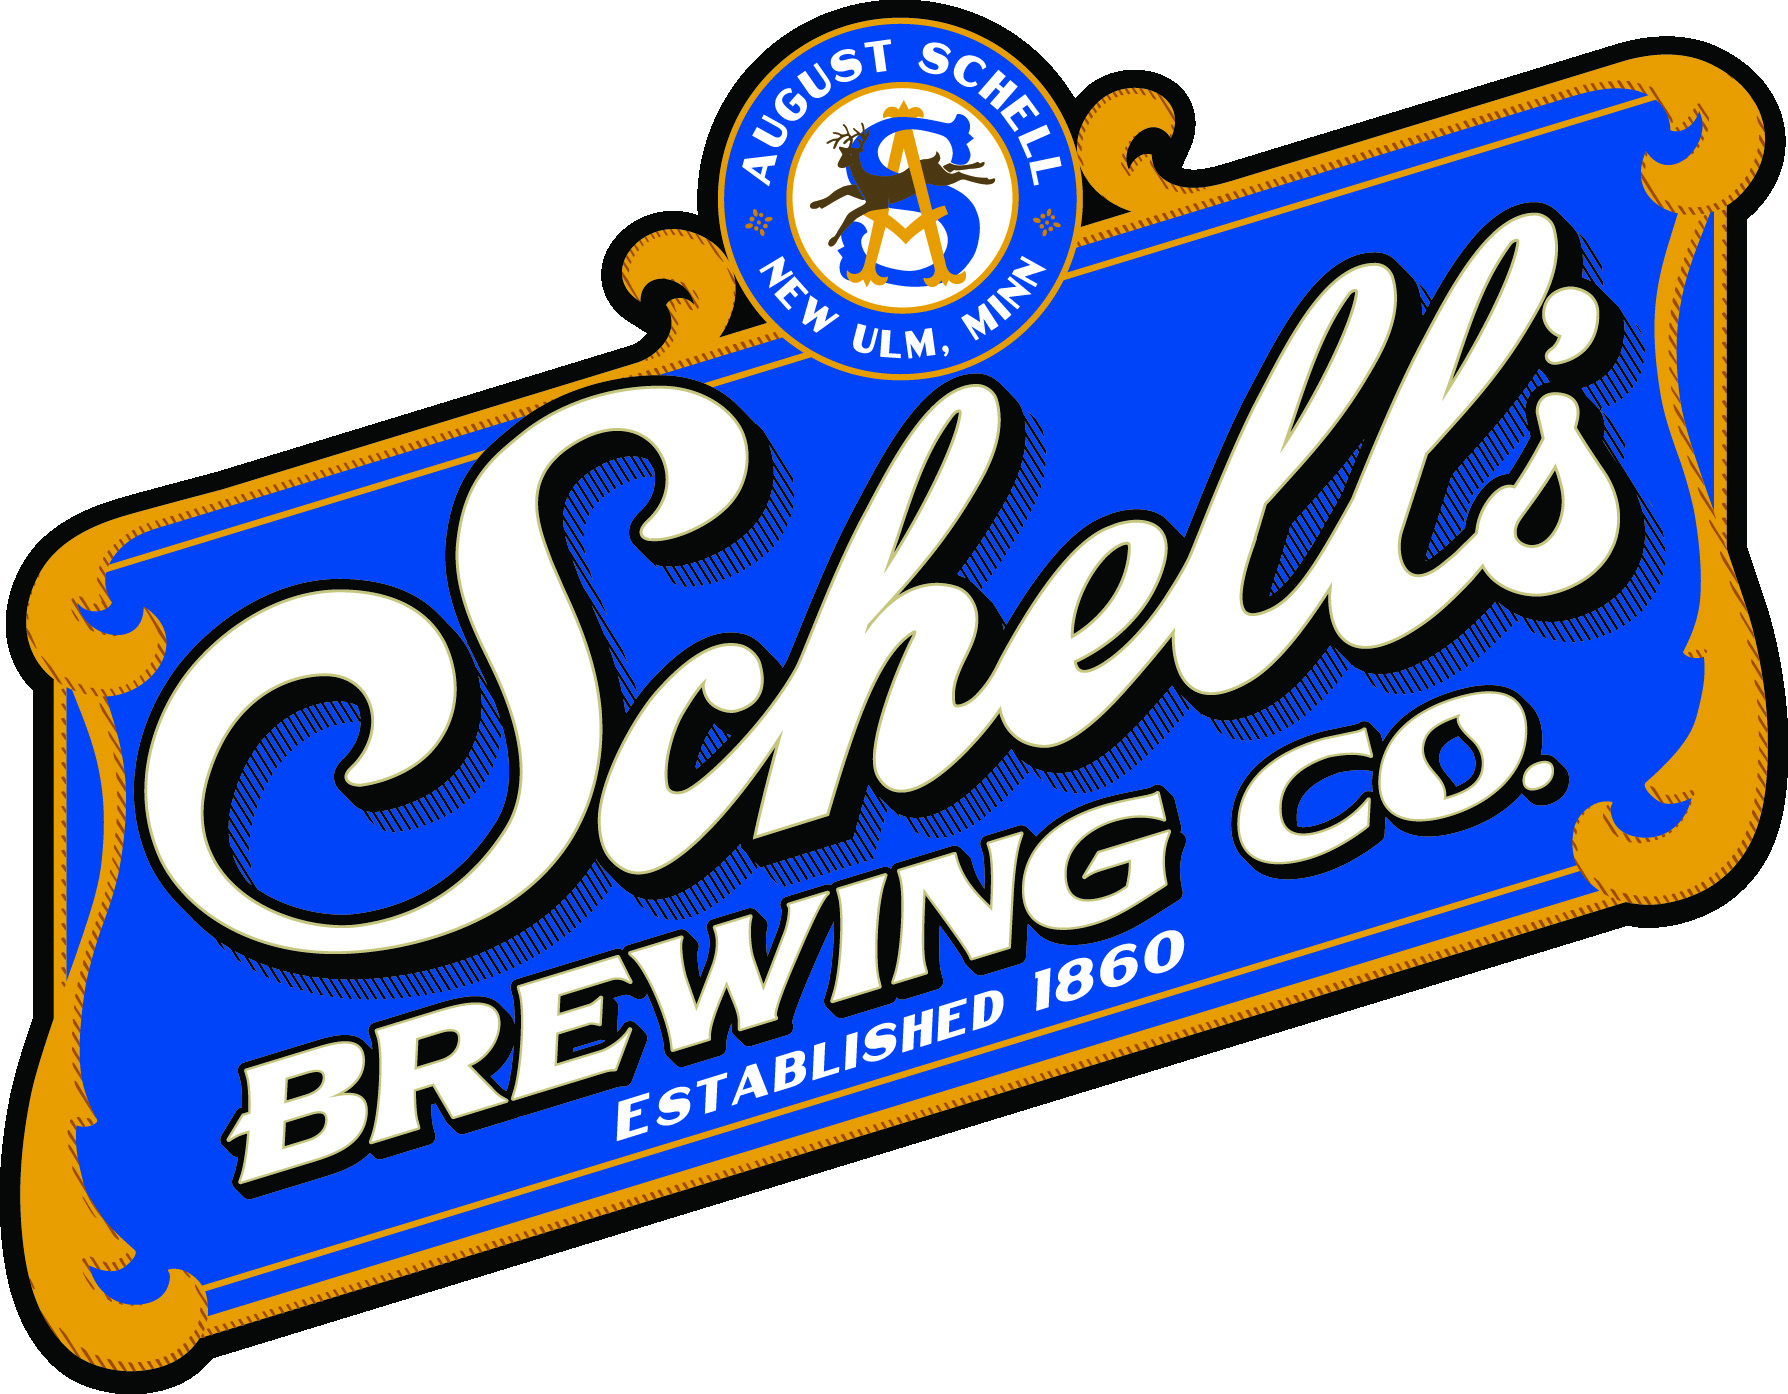 August Schell Brewing Company jobs